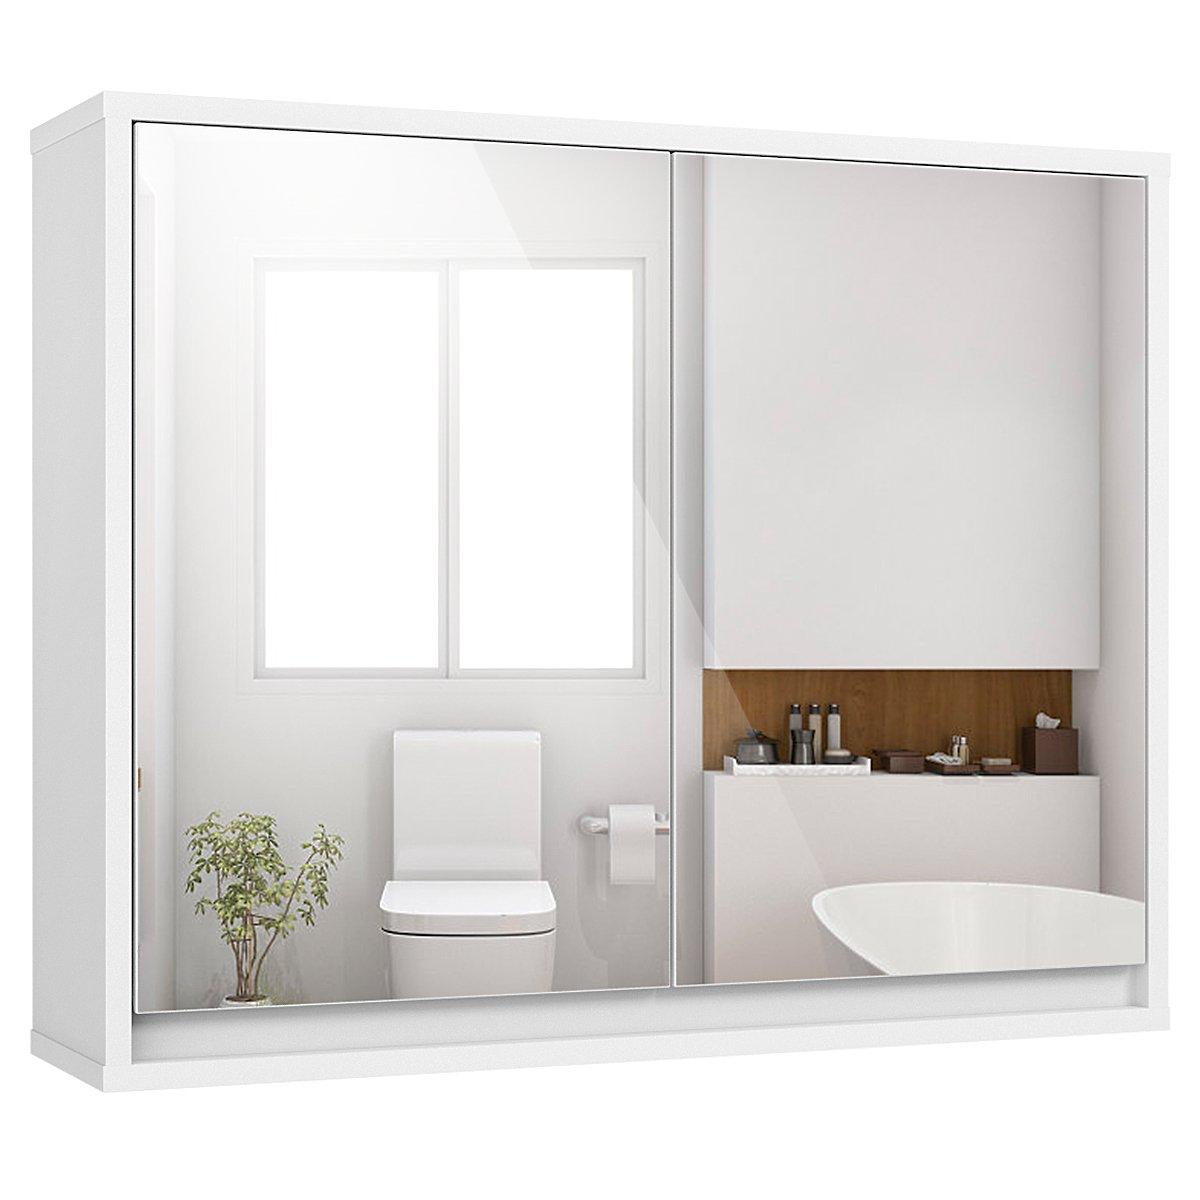 Bathroom Wall Mounted Cabinet Double Mirrored Door Organizer with Storage Shelf